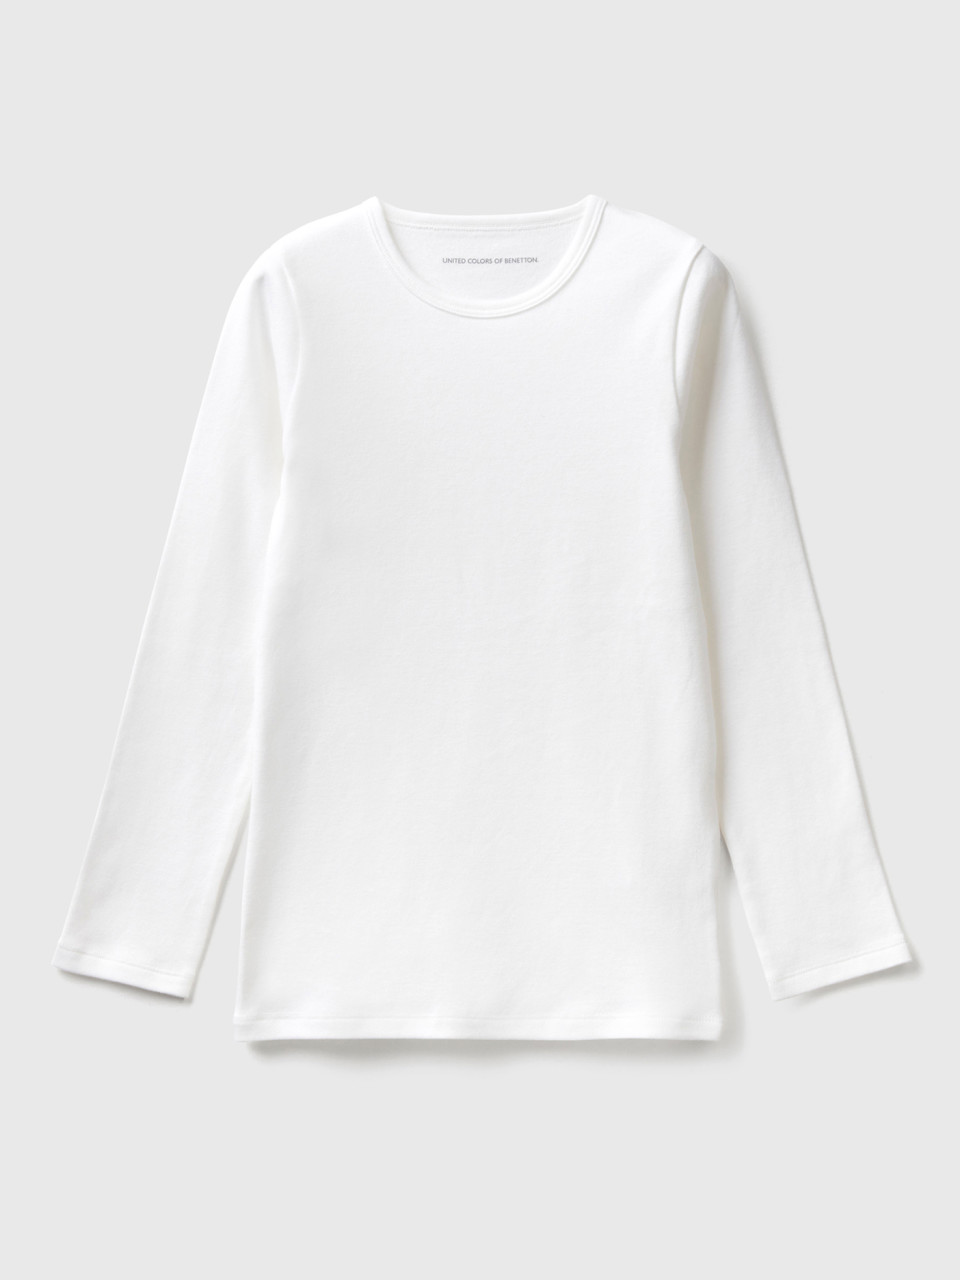 Benetton, Long Sleeve T-shirt In Warm Cotton, White, Kids